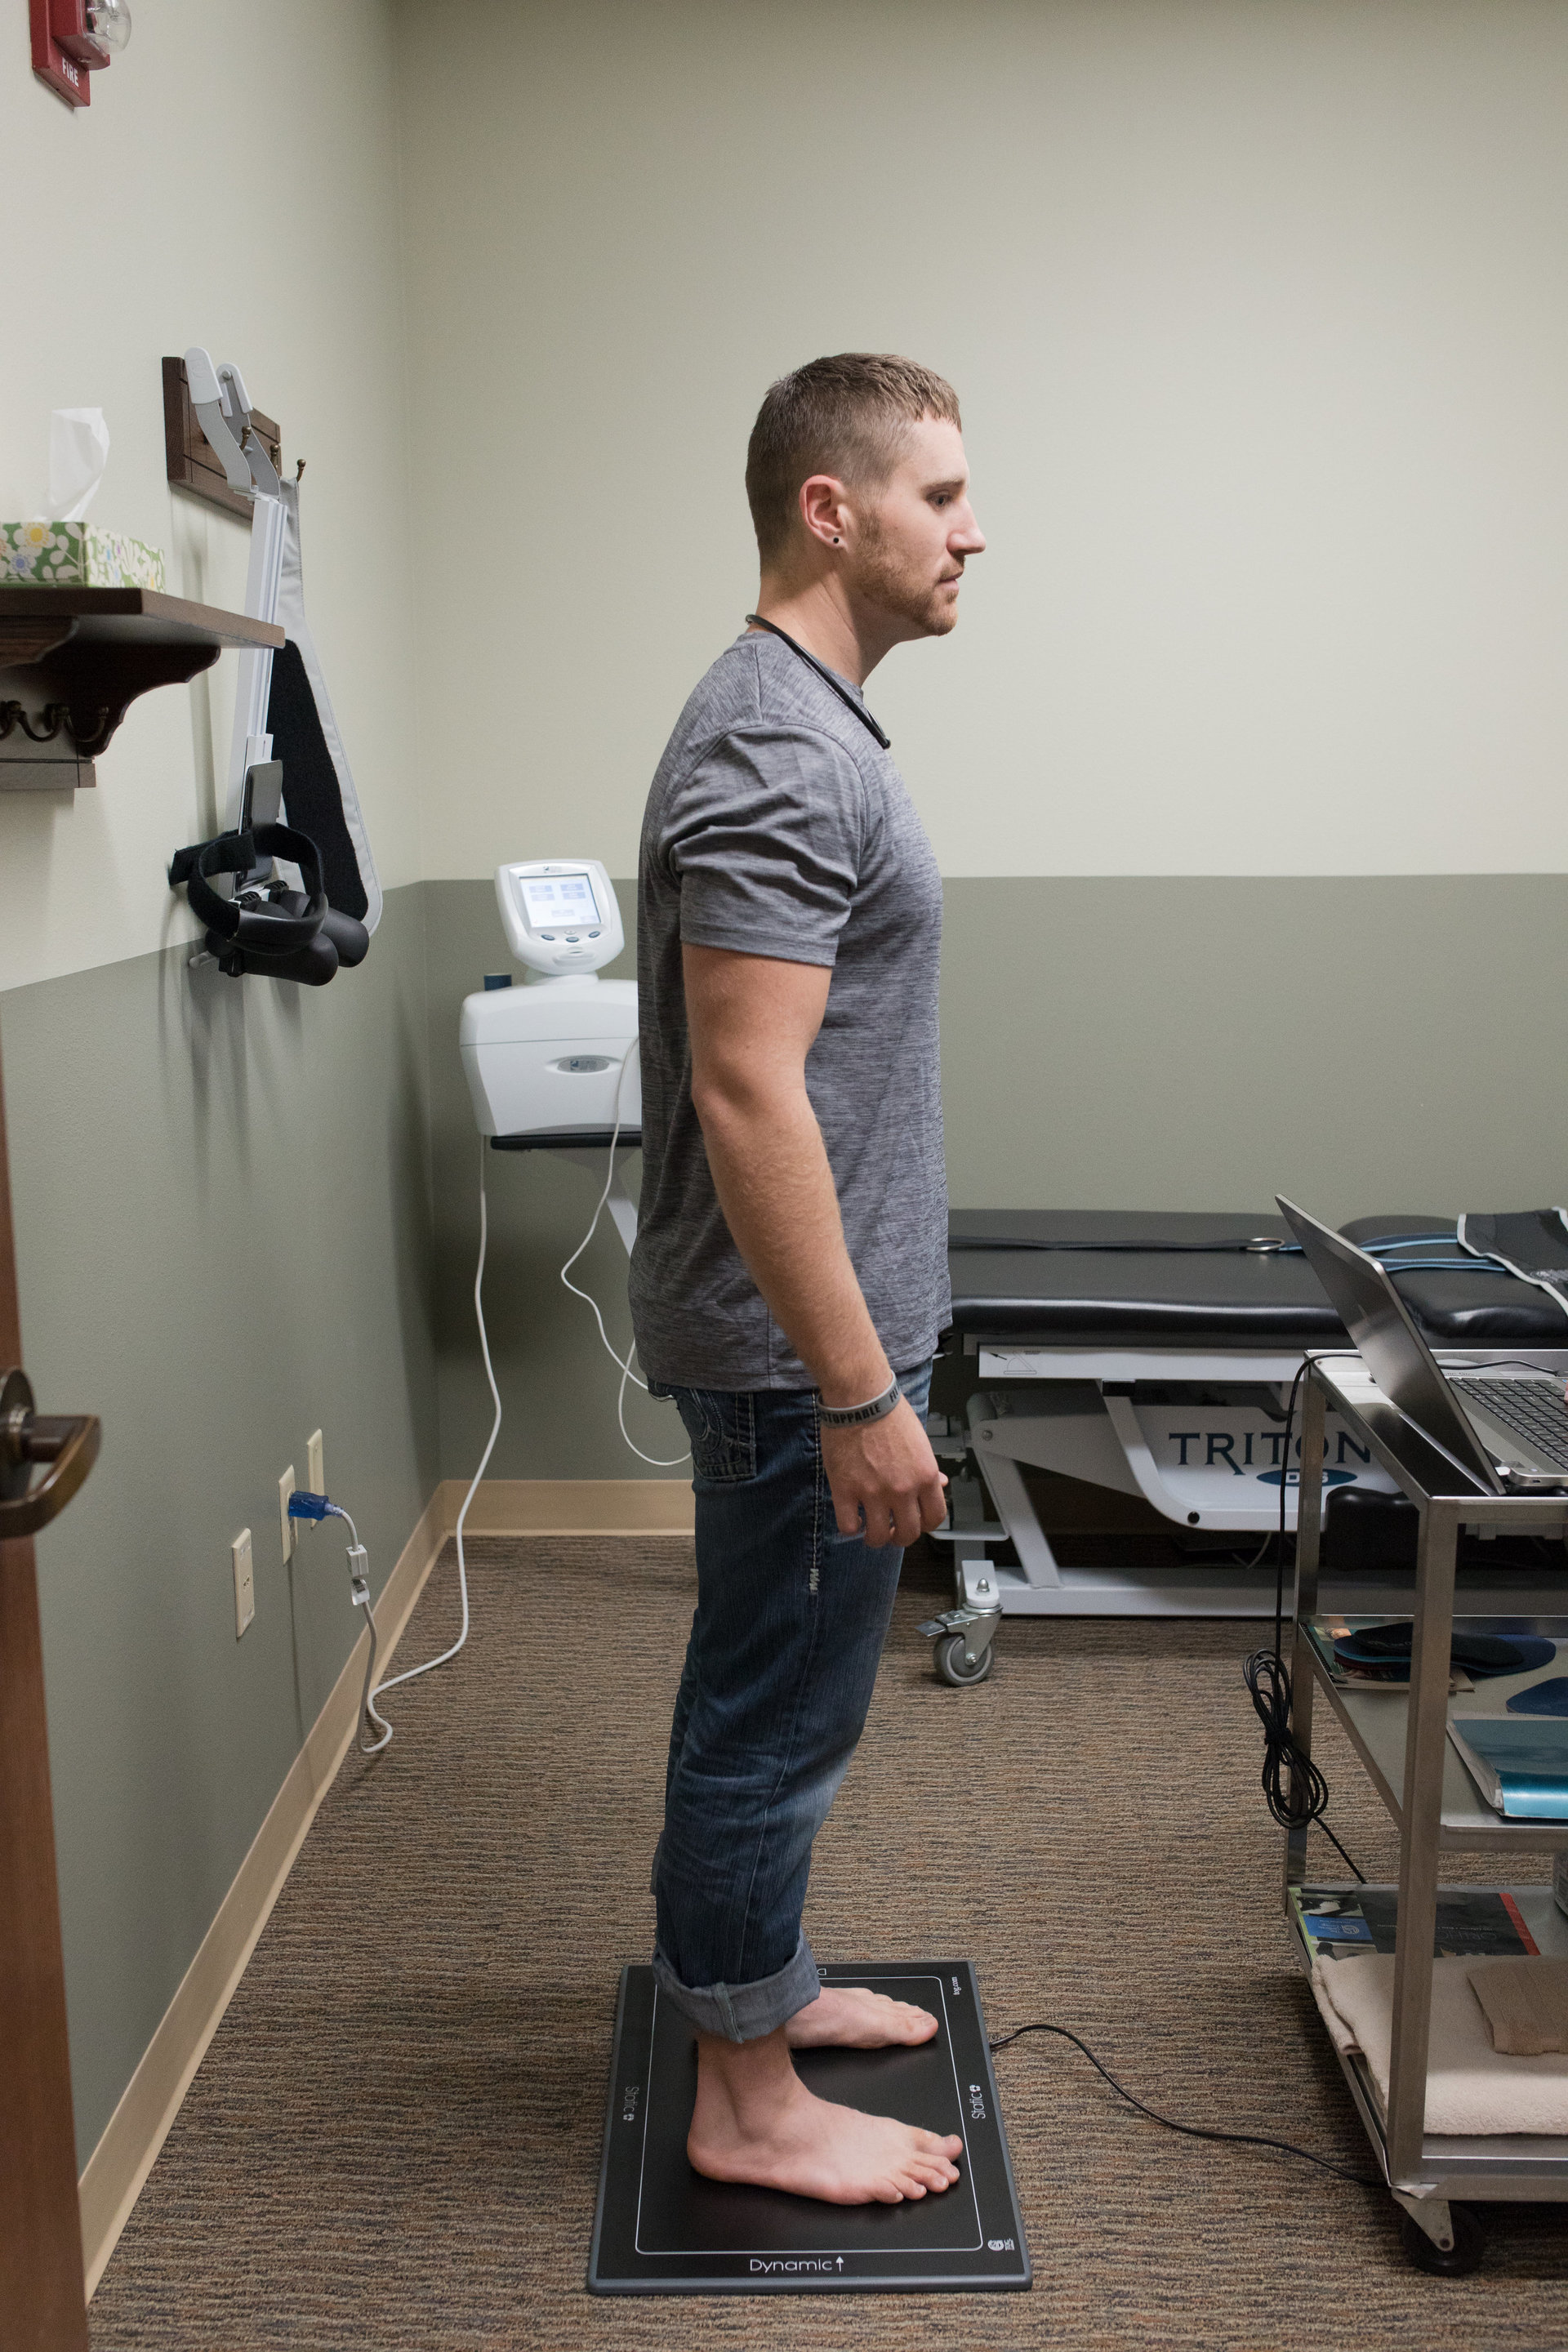 Electric Muscle Stimulation, River Ridge Spine & Rehab